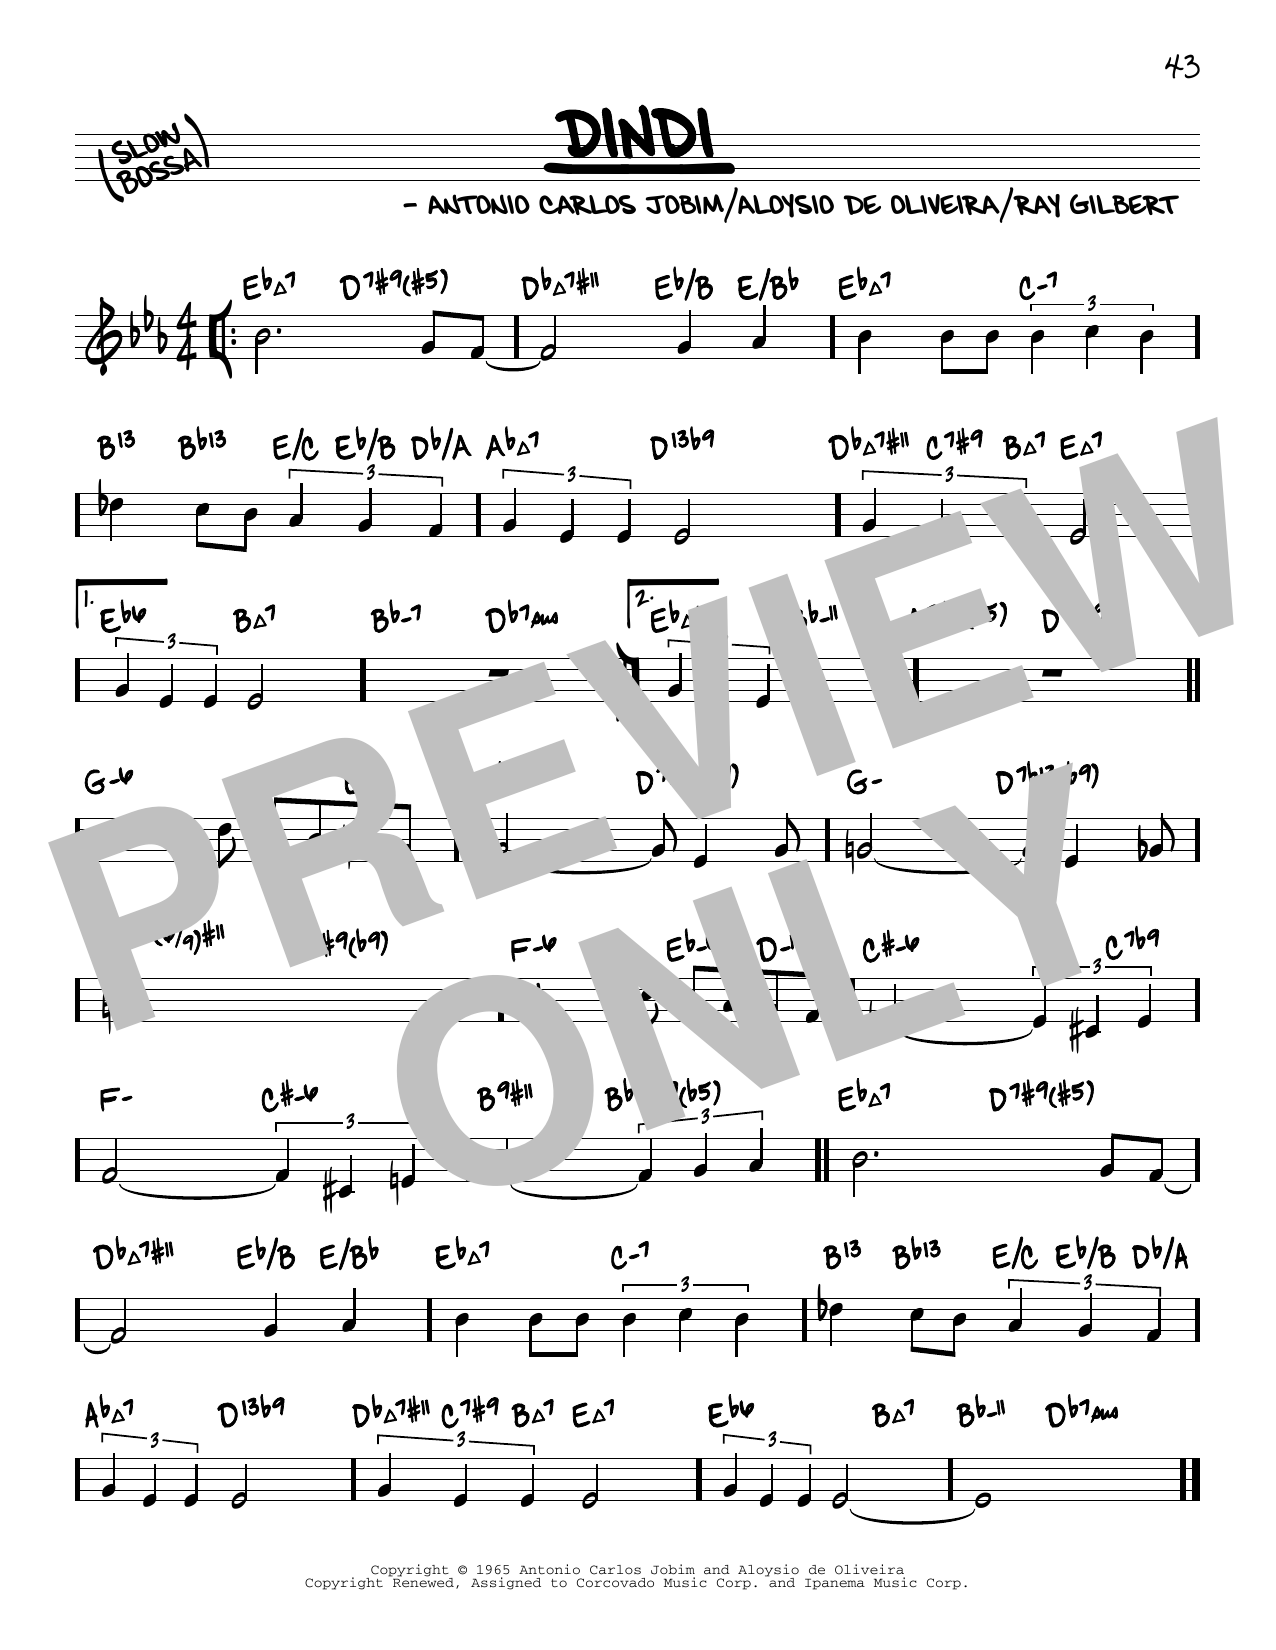 Antonio Carlos Jobim Dindi (arr. David Hazeltine) Sheet Music Notes & Chords for Real Book – Enhanced Chords - Download or Print PDF